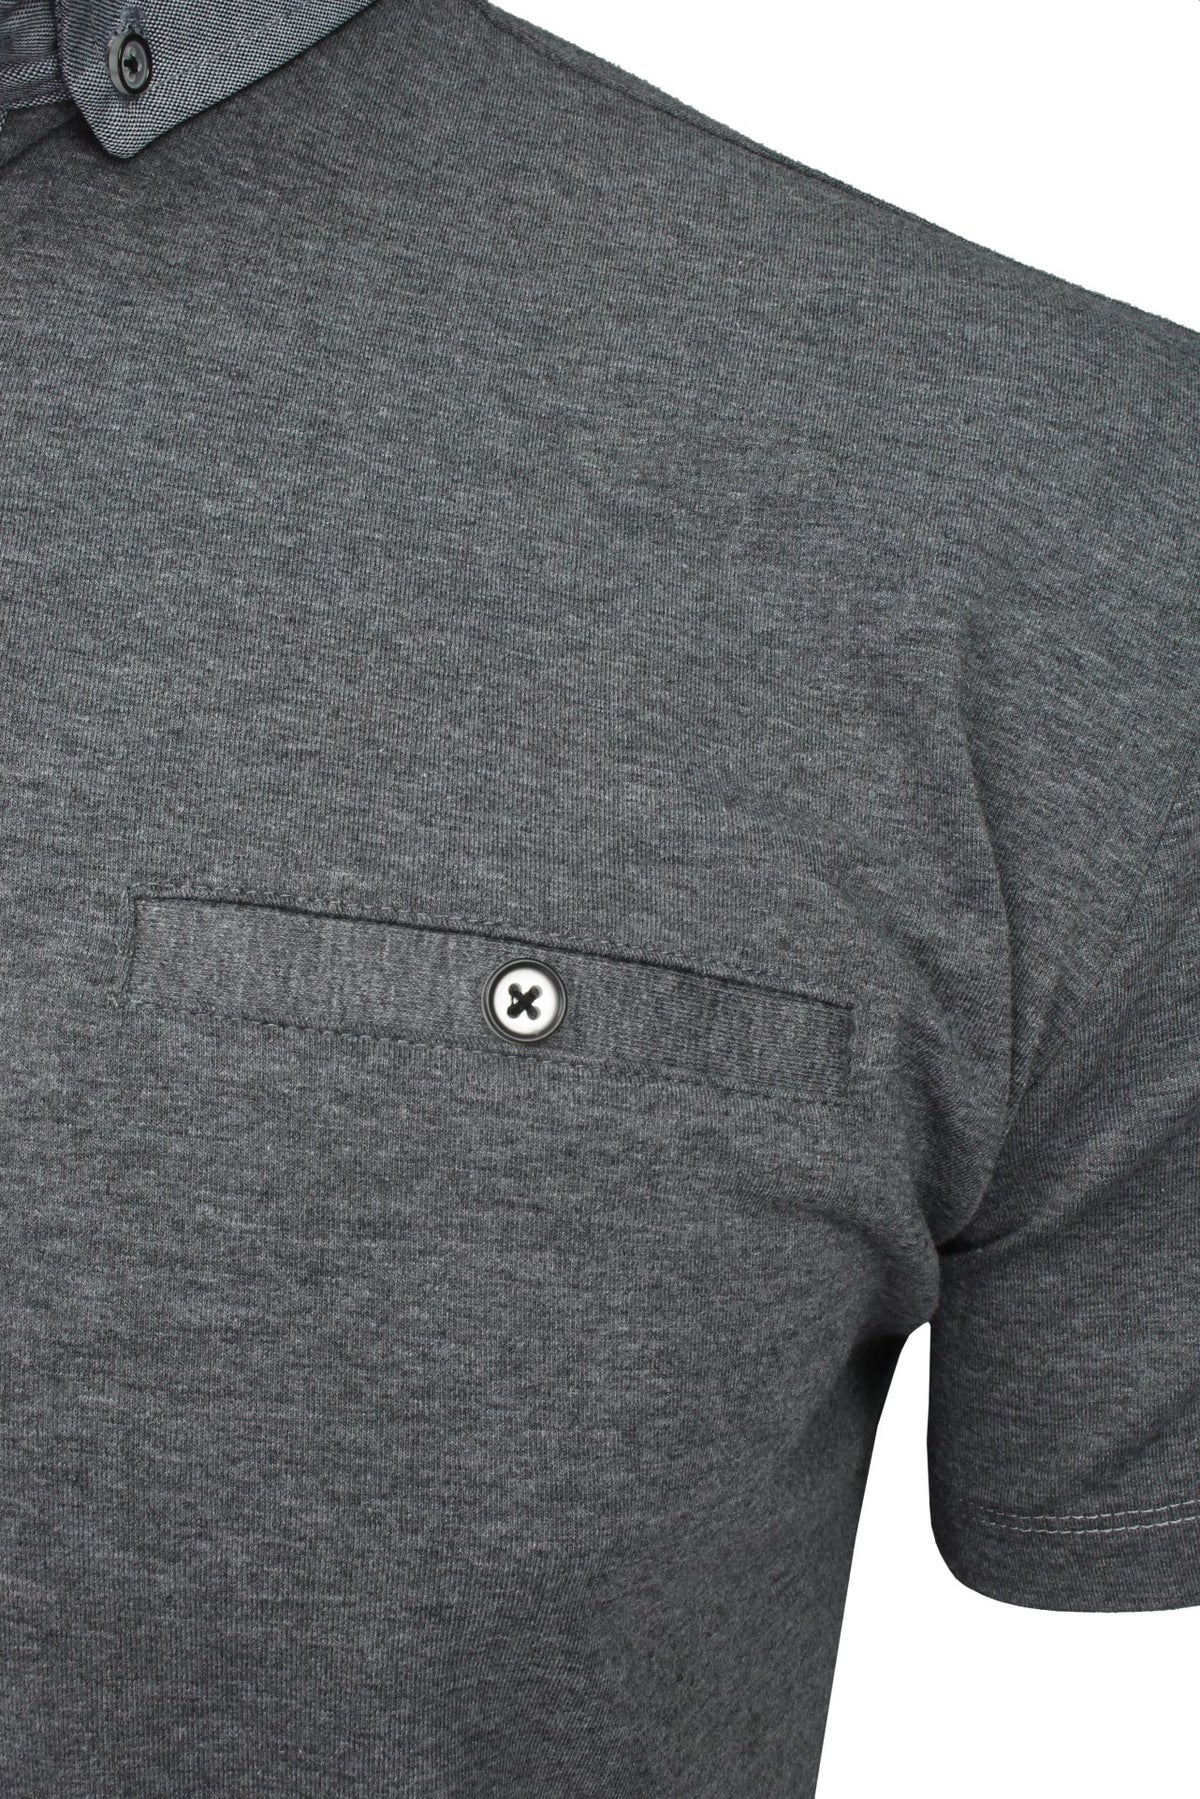 Xact Mens Polo Shirt with Short Sleeves and Button Down Collar, 02, Xp1076, Dark Grey